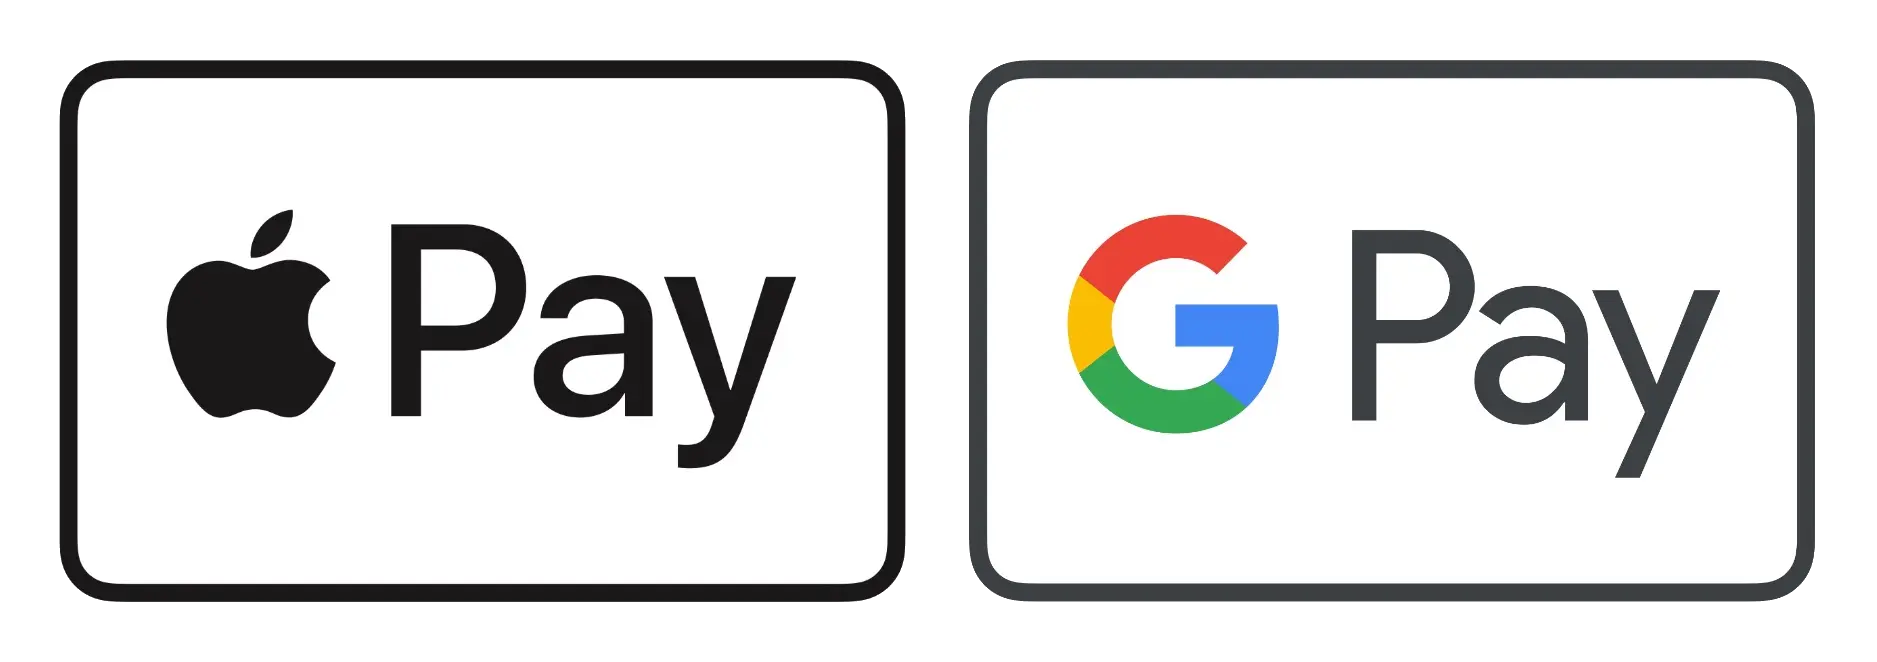 Apple pay / Google pay